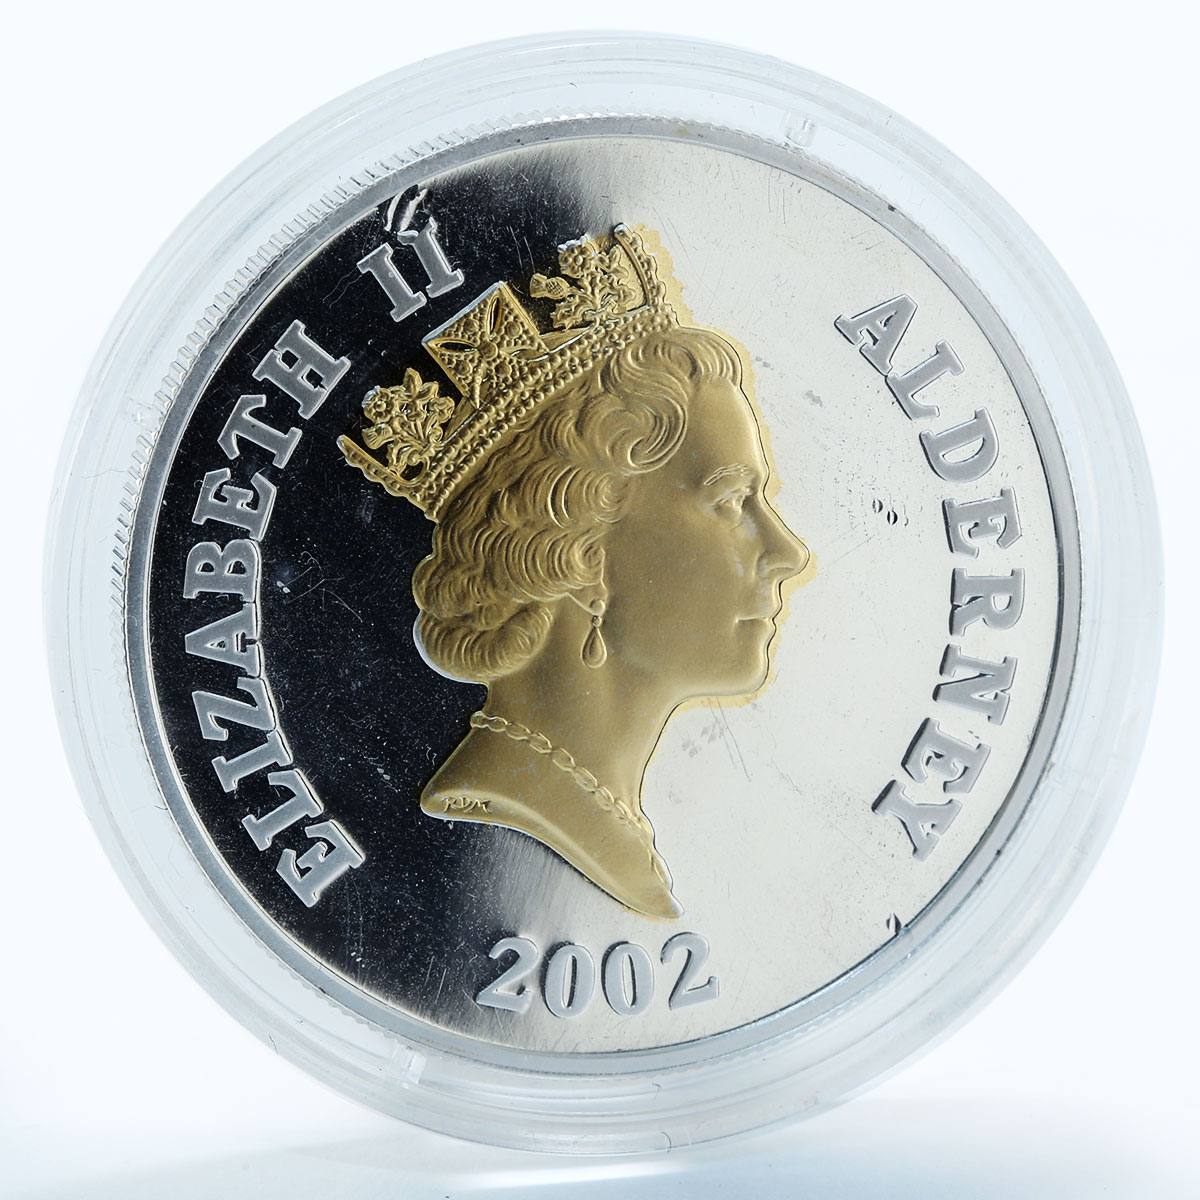 Alderney 5 pounds Golden Jubilee gilded silver proof coin 2002